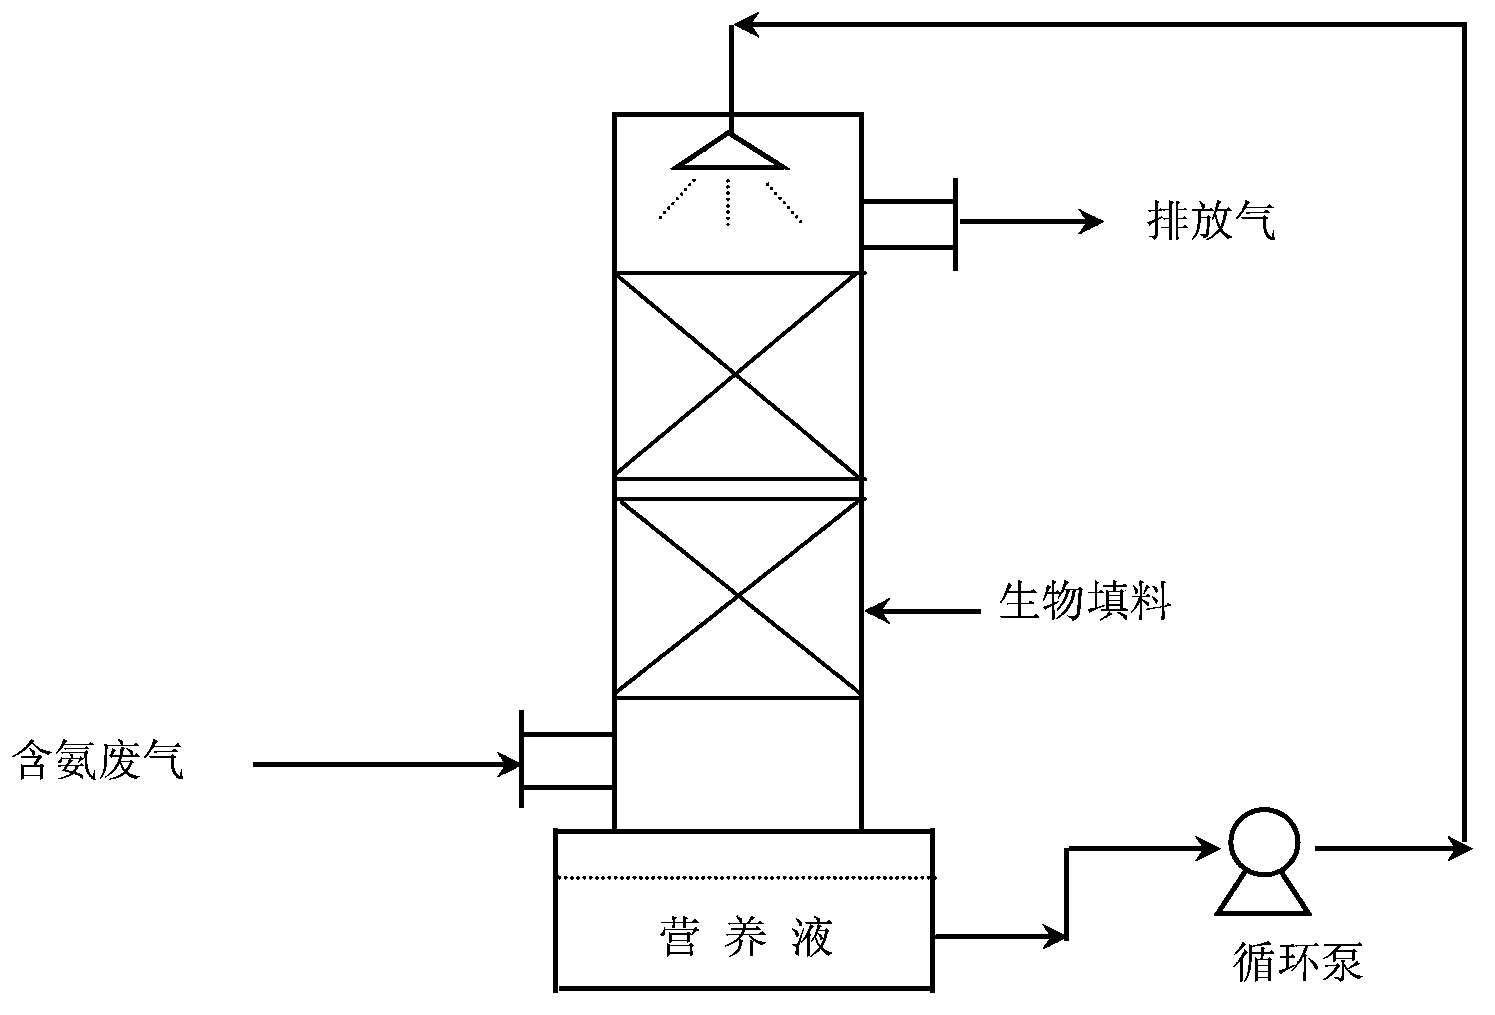 Preparation method of macromolecule activated carbon composite filler